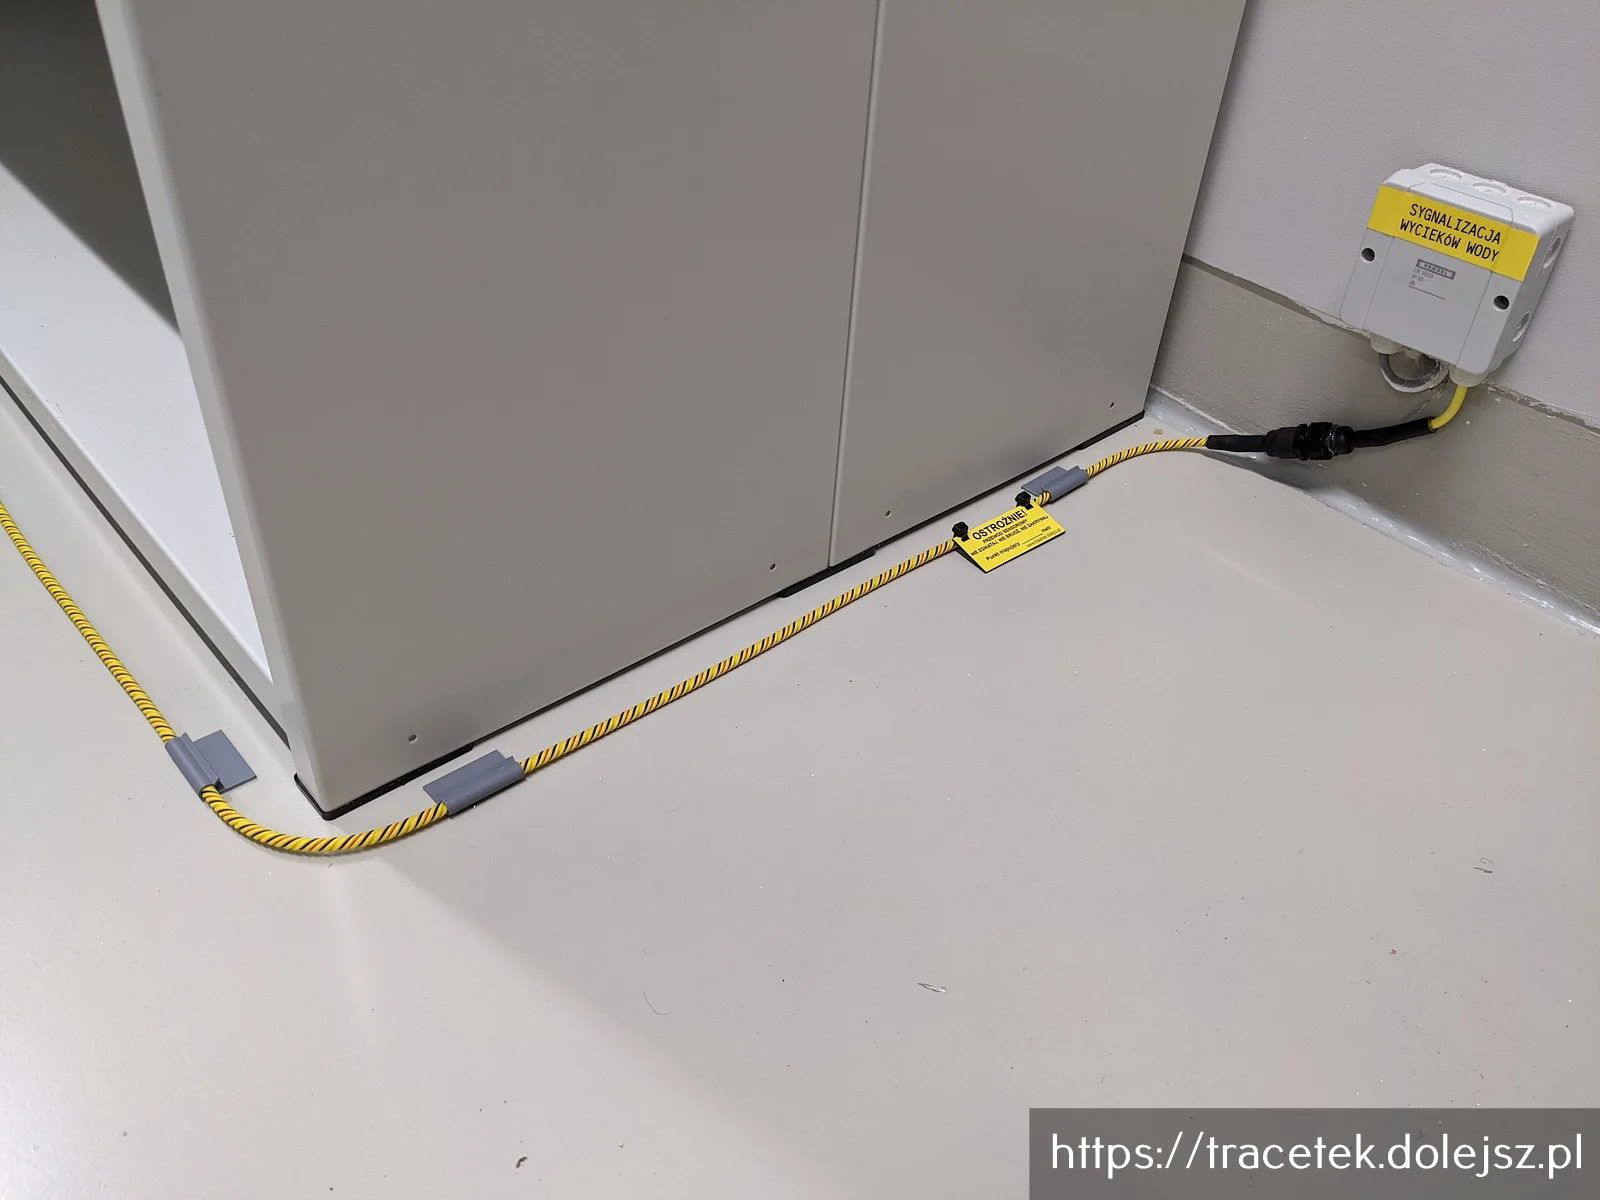 water leak detection tape